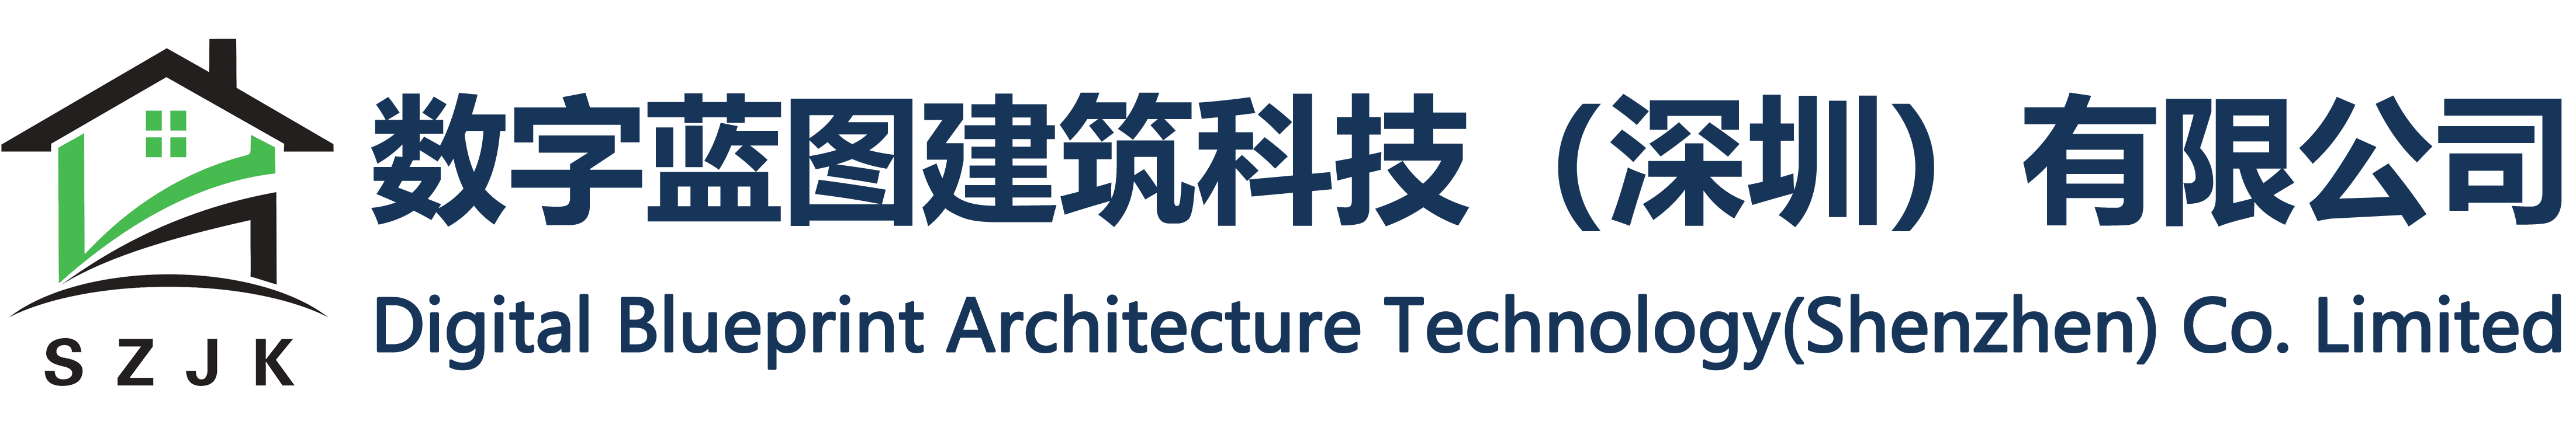 Digital Blueprint Architecture Technology(Shenzhen) Co. Limited